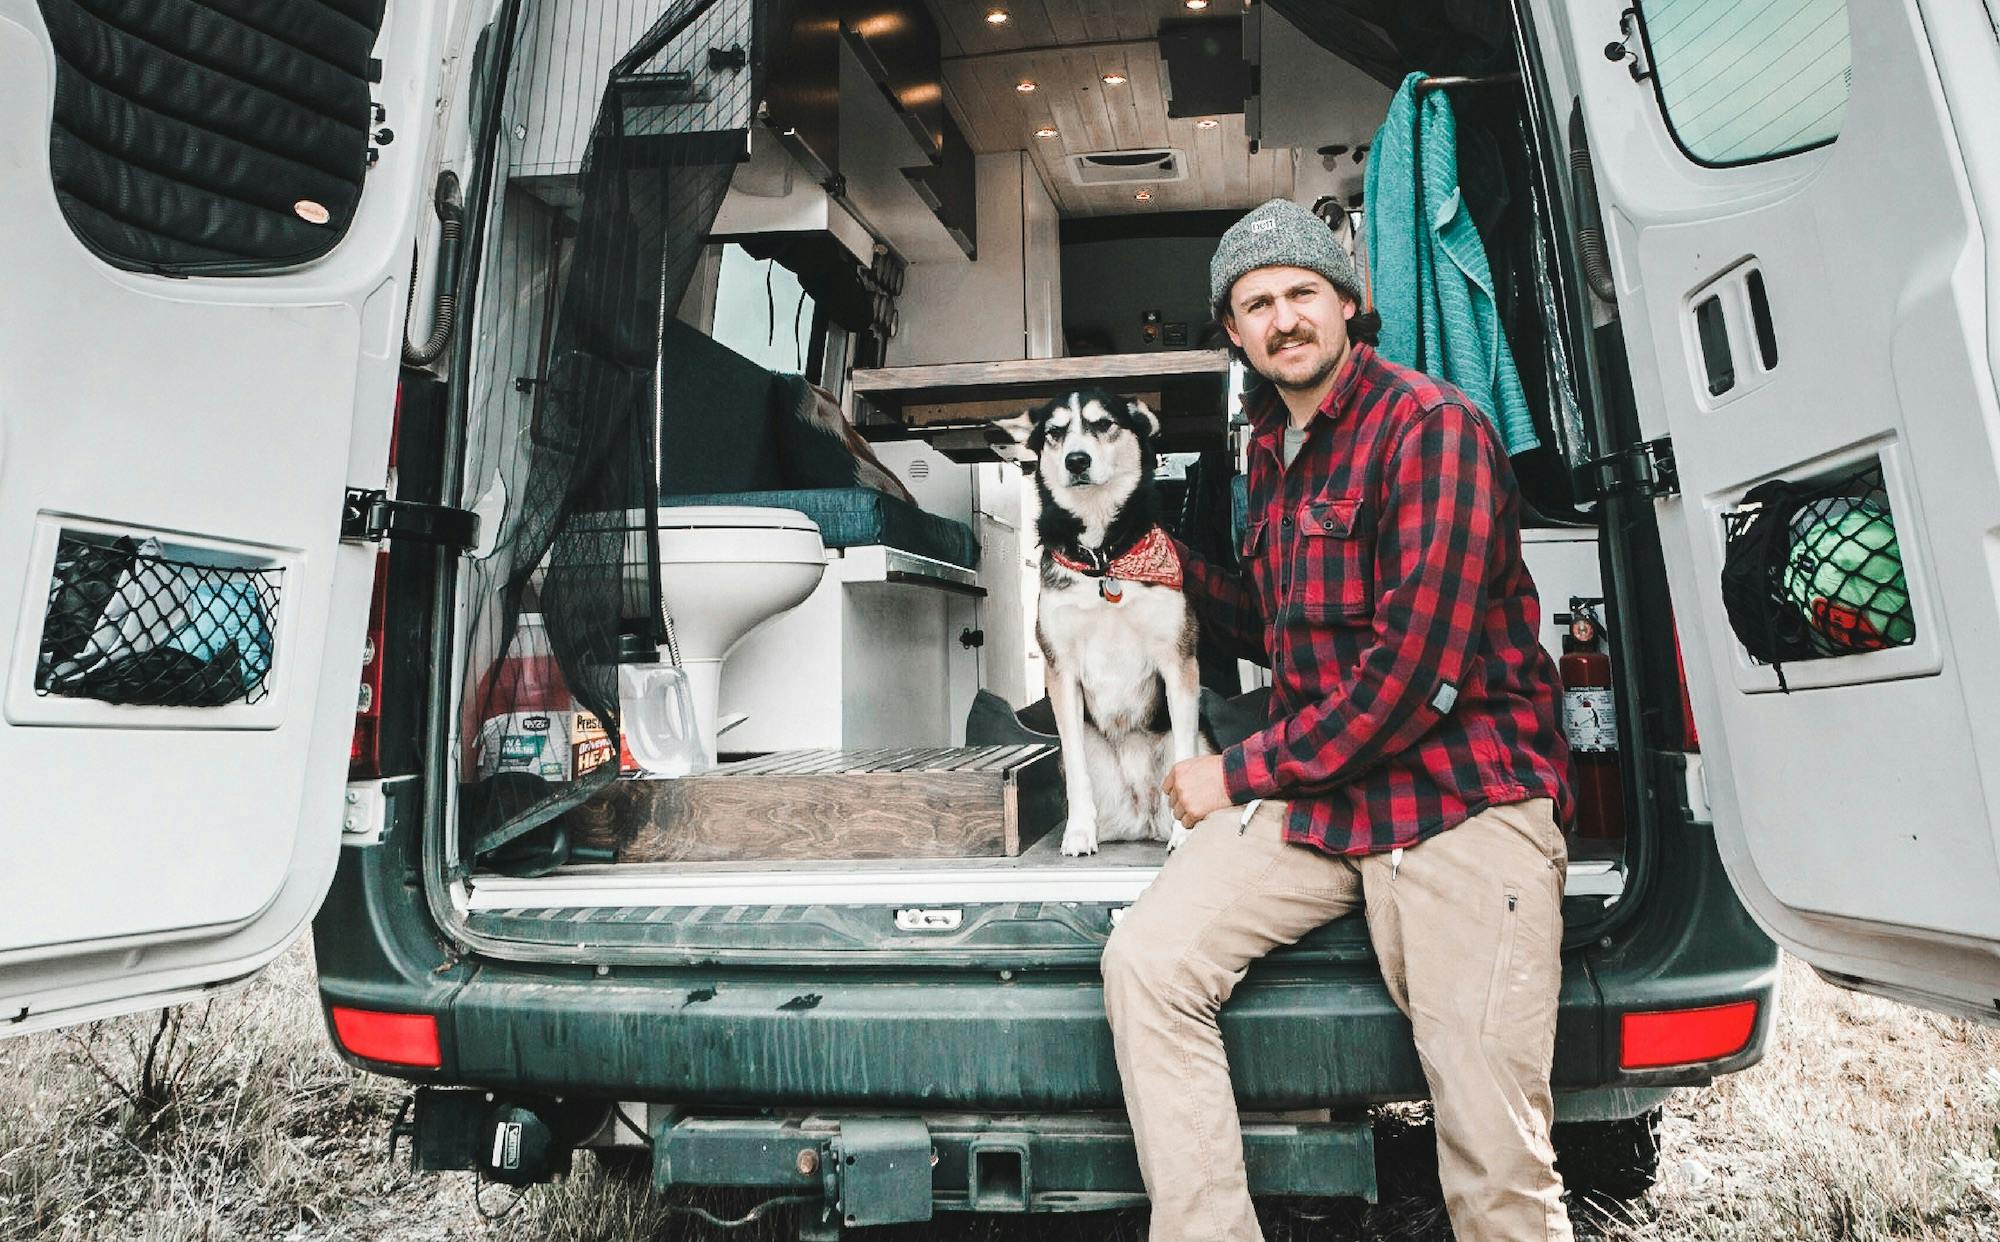 Stealth Chevy Hightop Camper Van With Shower & Toilet - Full Time Vanlife 